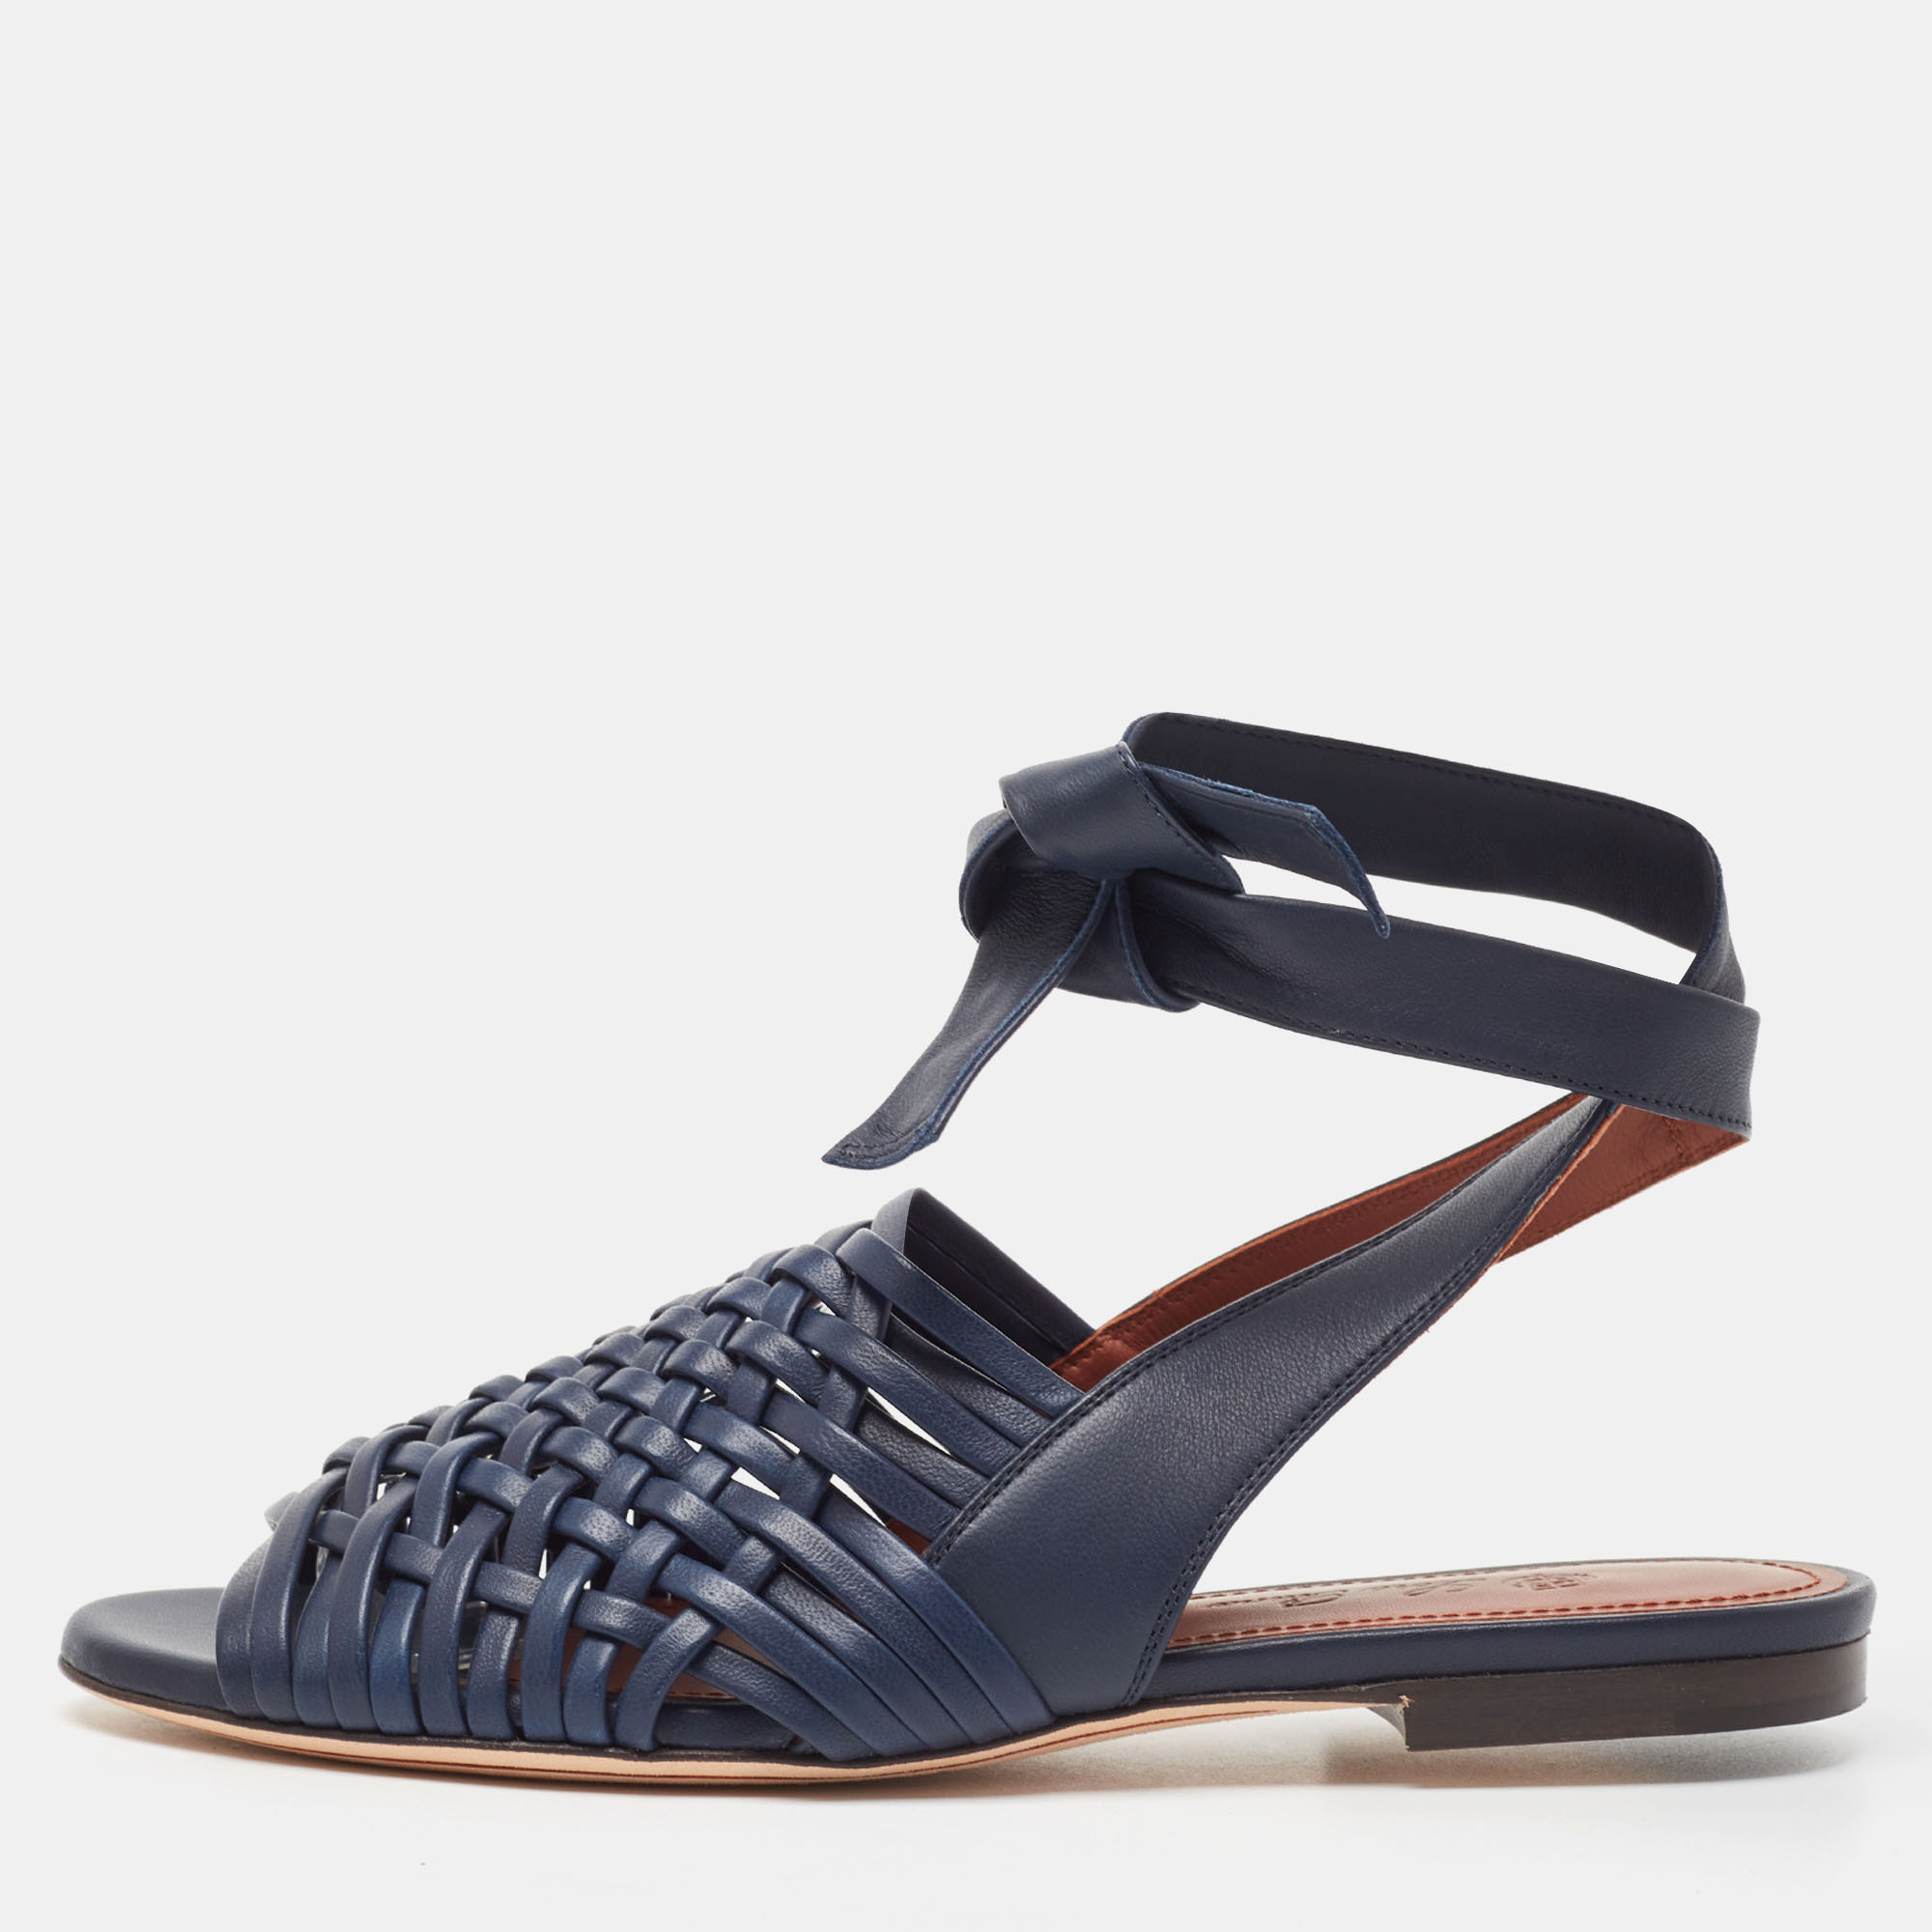 Loro piana blue woven leather slingback flat sandals size 36.5